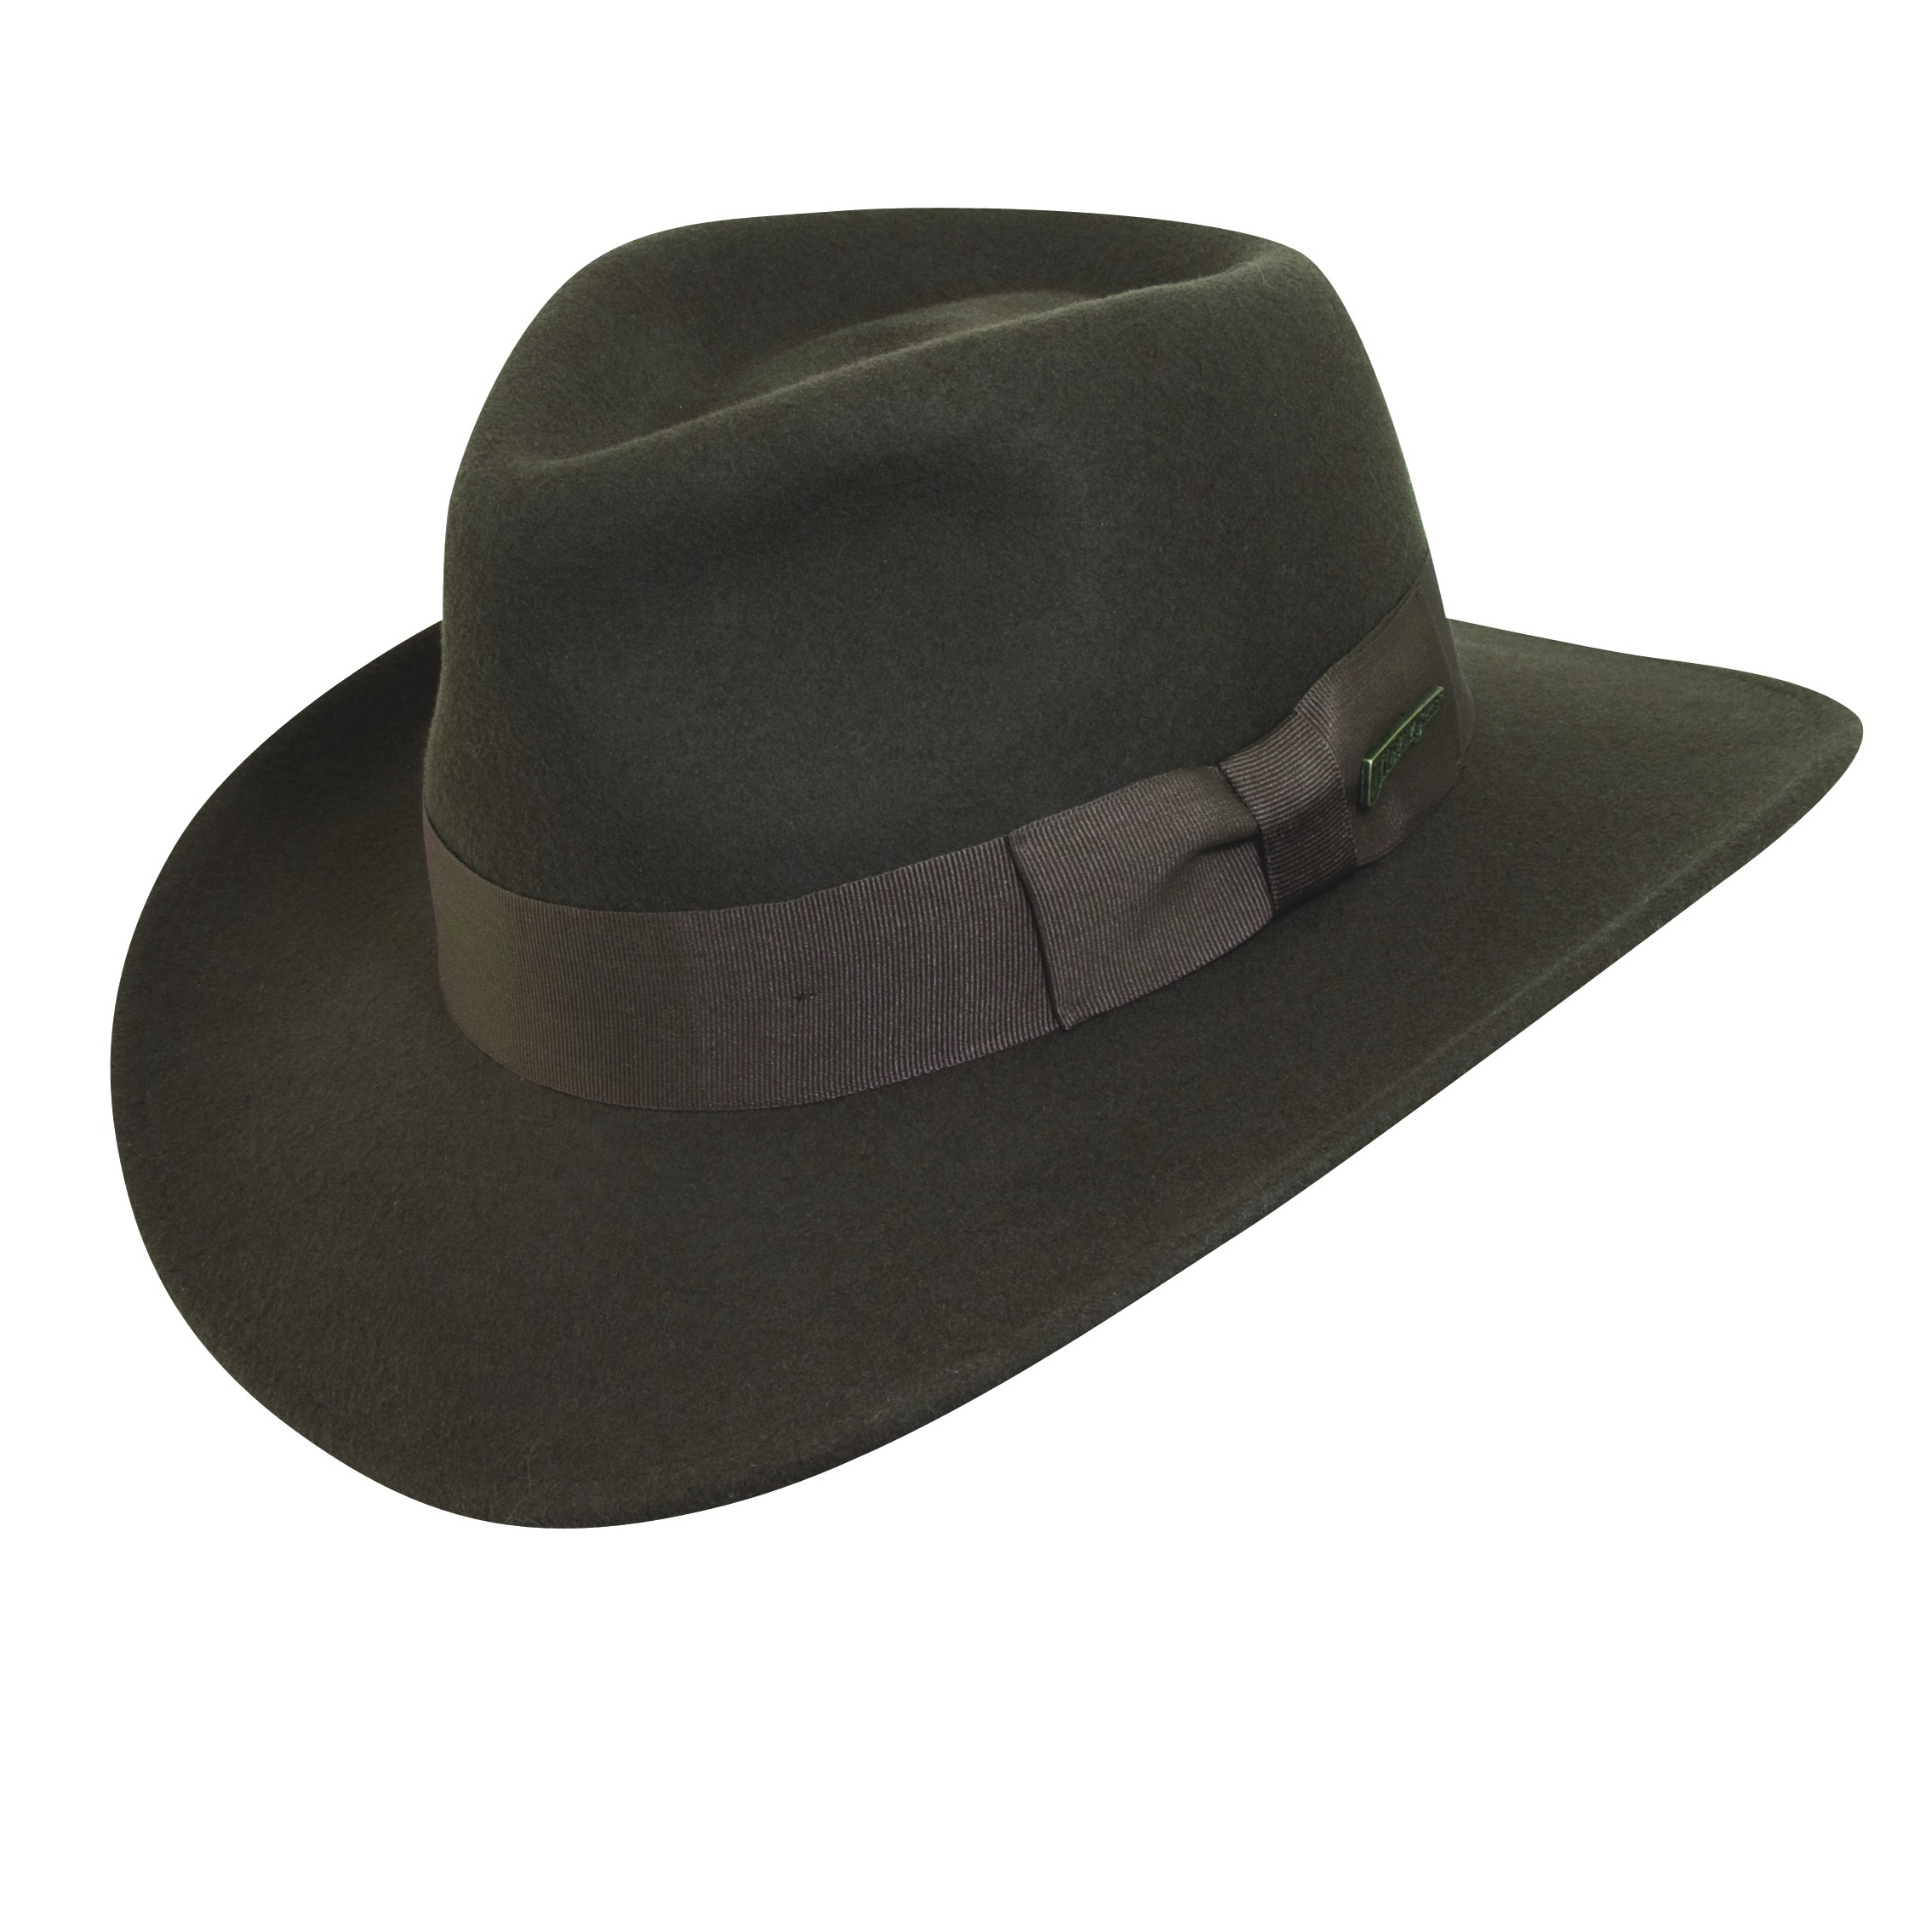 Indiana Jones Felt Hat